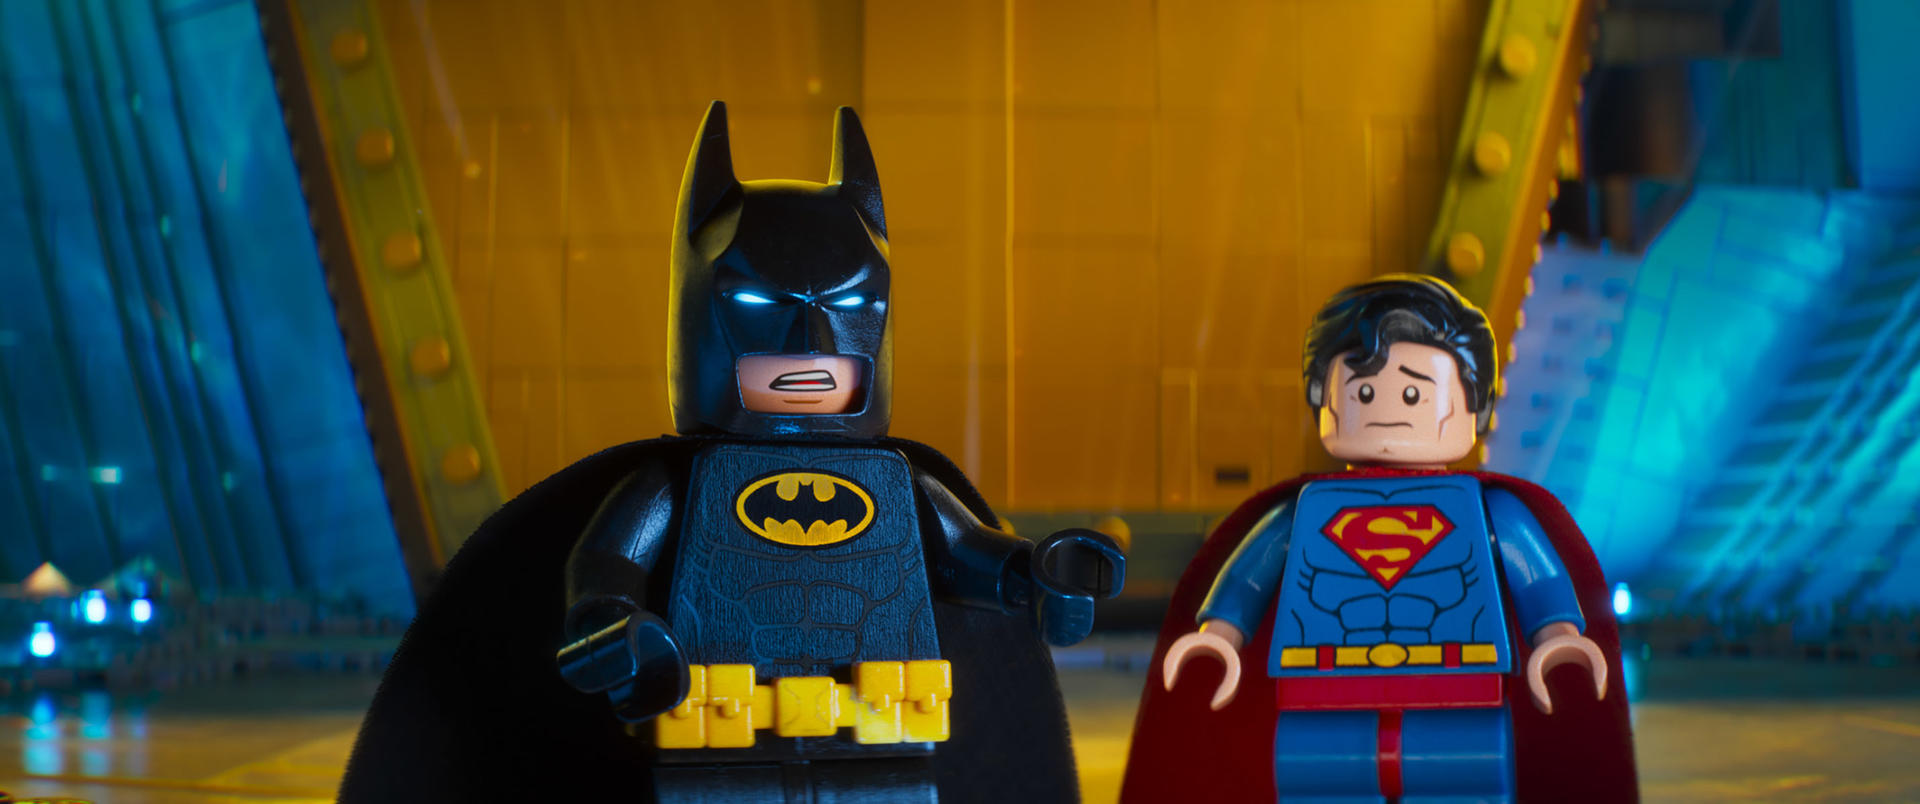 The Lego Batman Movie Batman und Superman